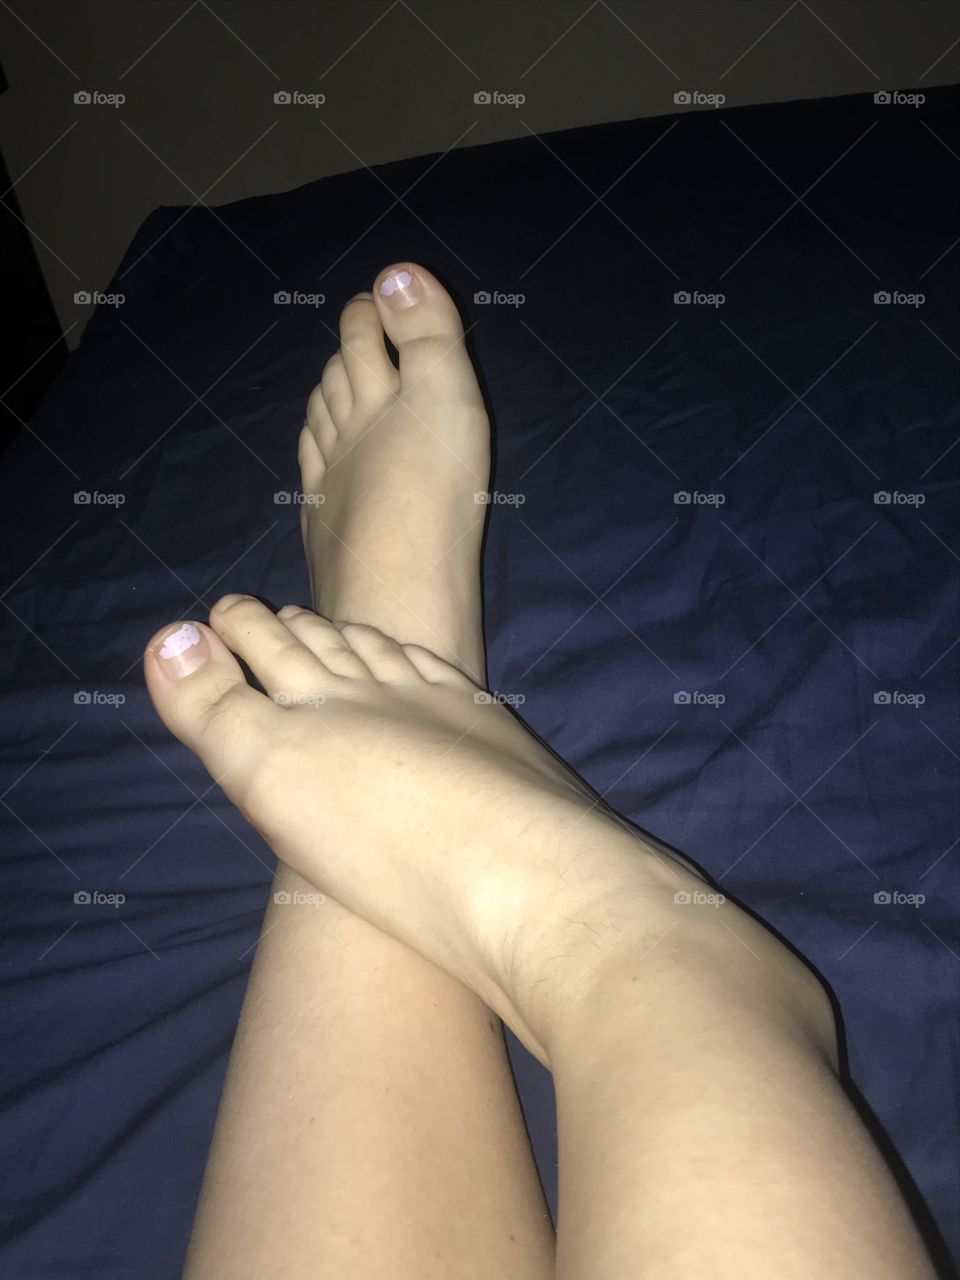 My foot is pretty small, i wear size 5 